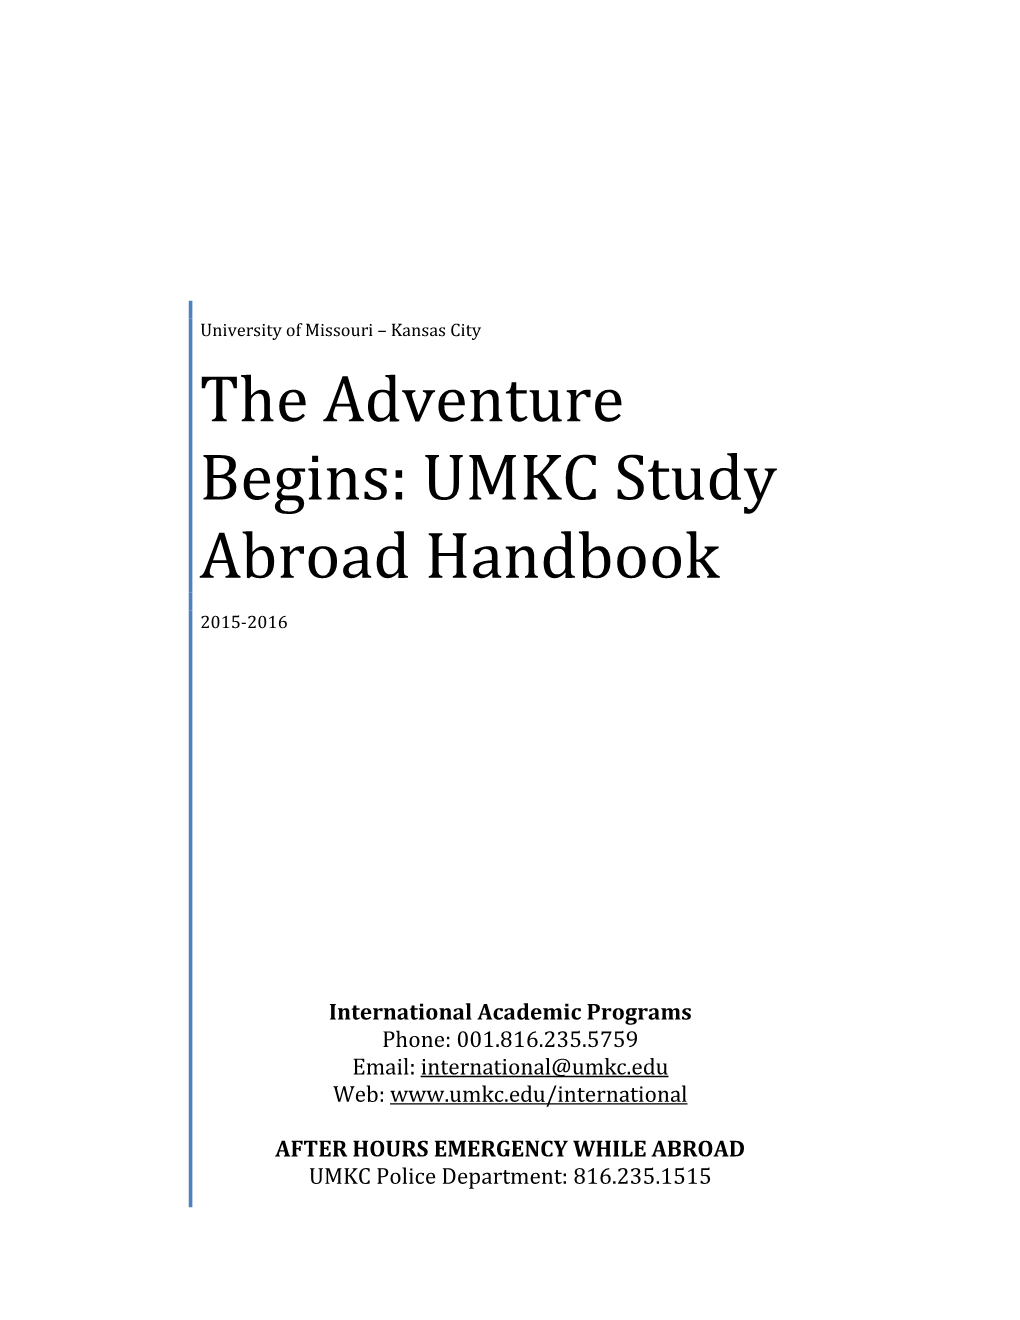 UMKC Study Abroad Handbook